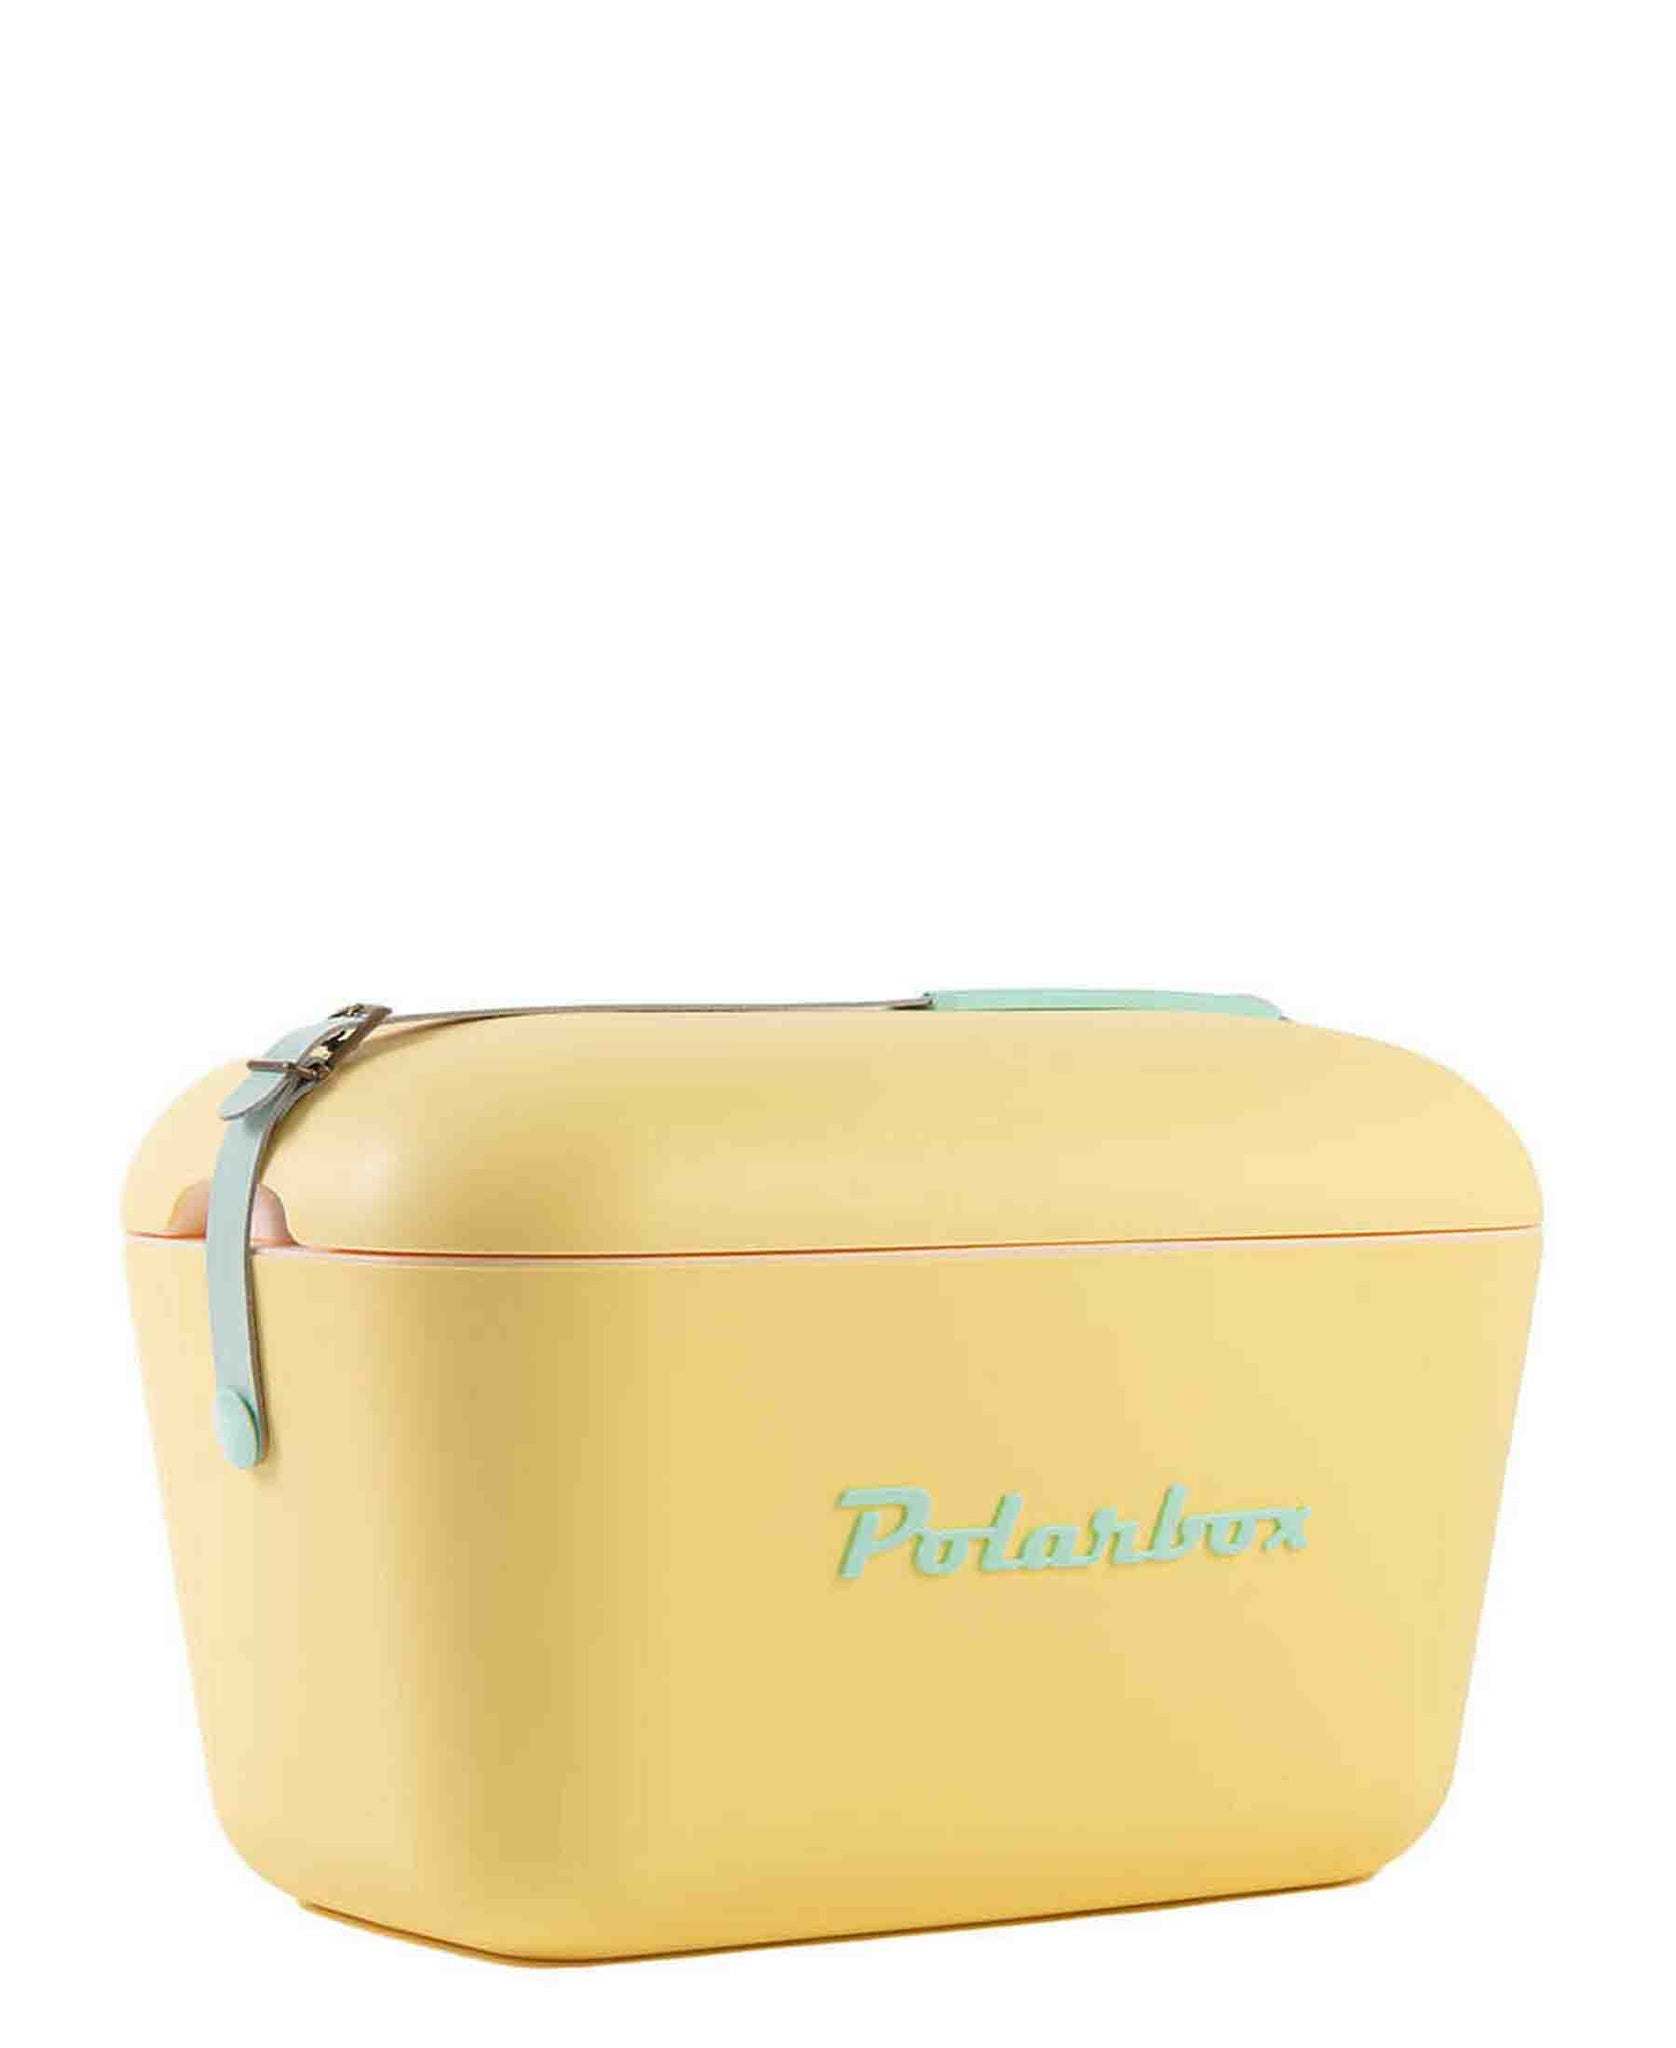 Retro 20L Polarbox Cooler - Yellow